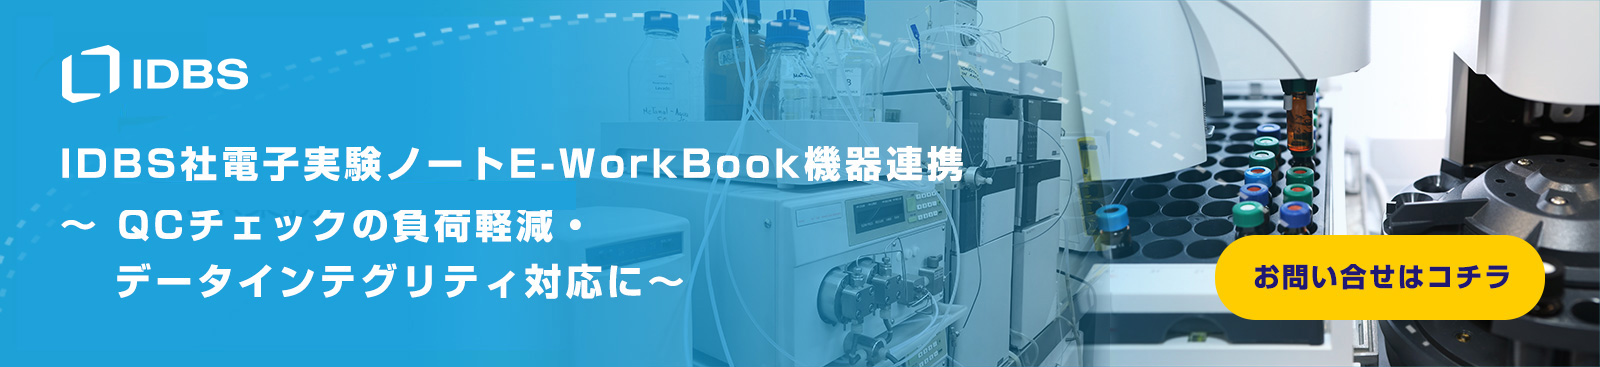 IDBS社電子実験ノートE-WorkBook機器連携~QCチェックの負荷軽減・データインテグリティ対応に～